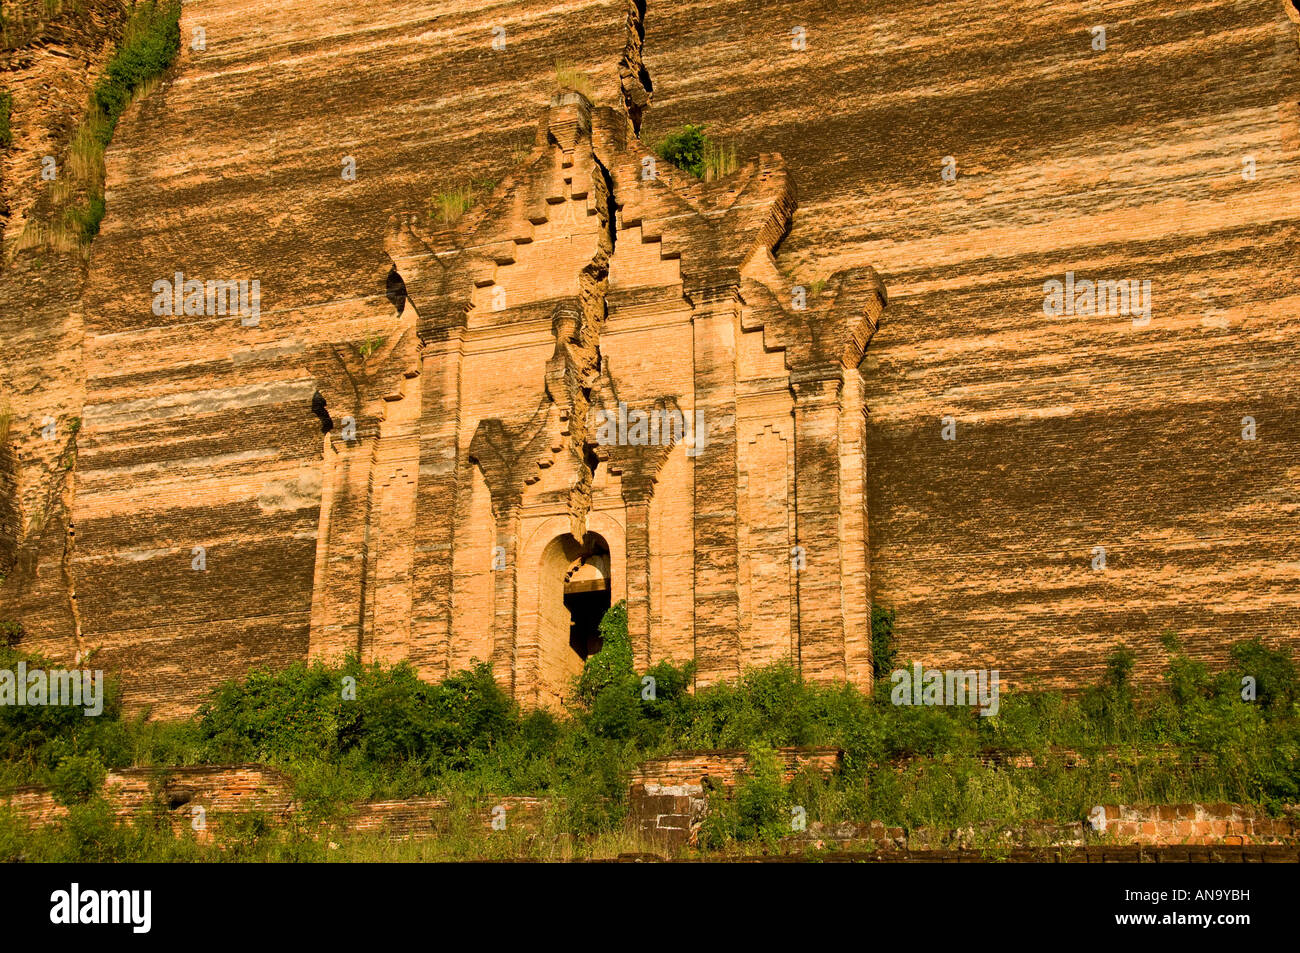 Mingun Pahtodawgyi Mungun en Birmania es un gran stupa inconclusa Foto de stock